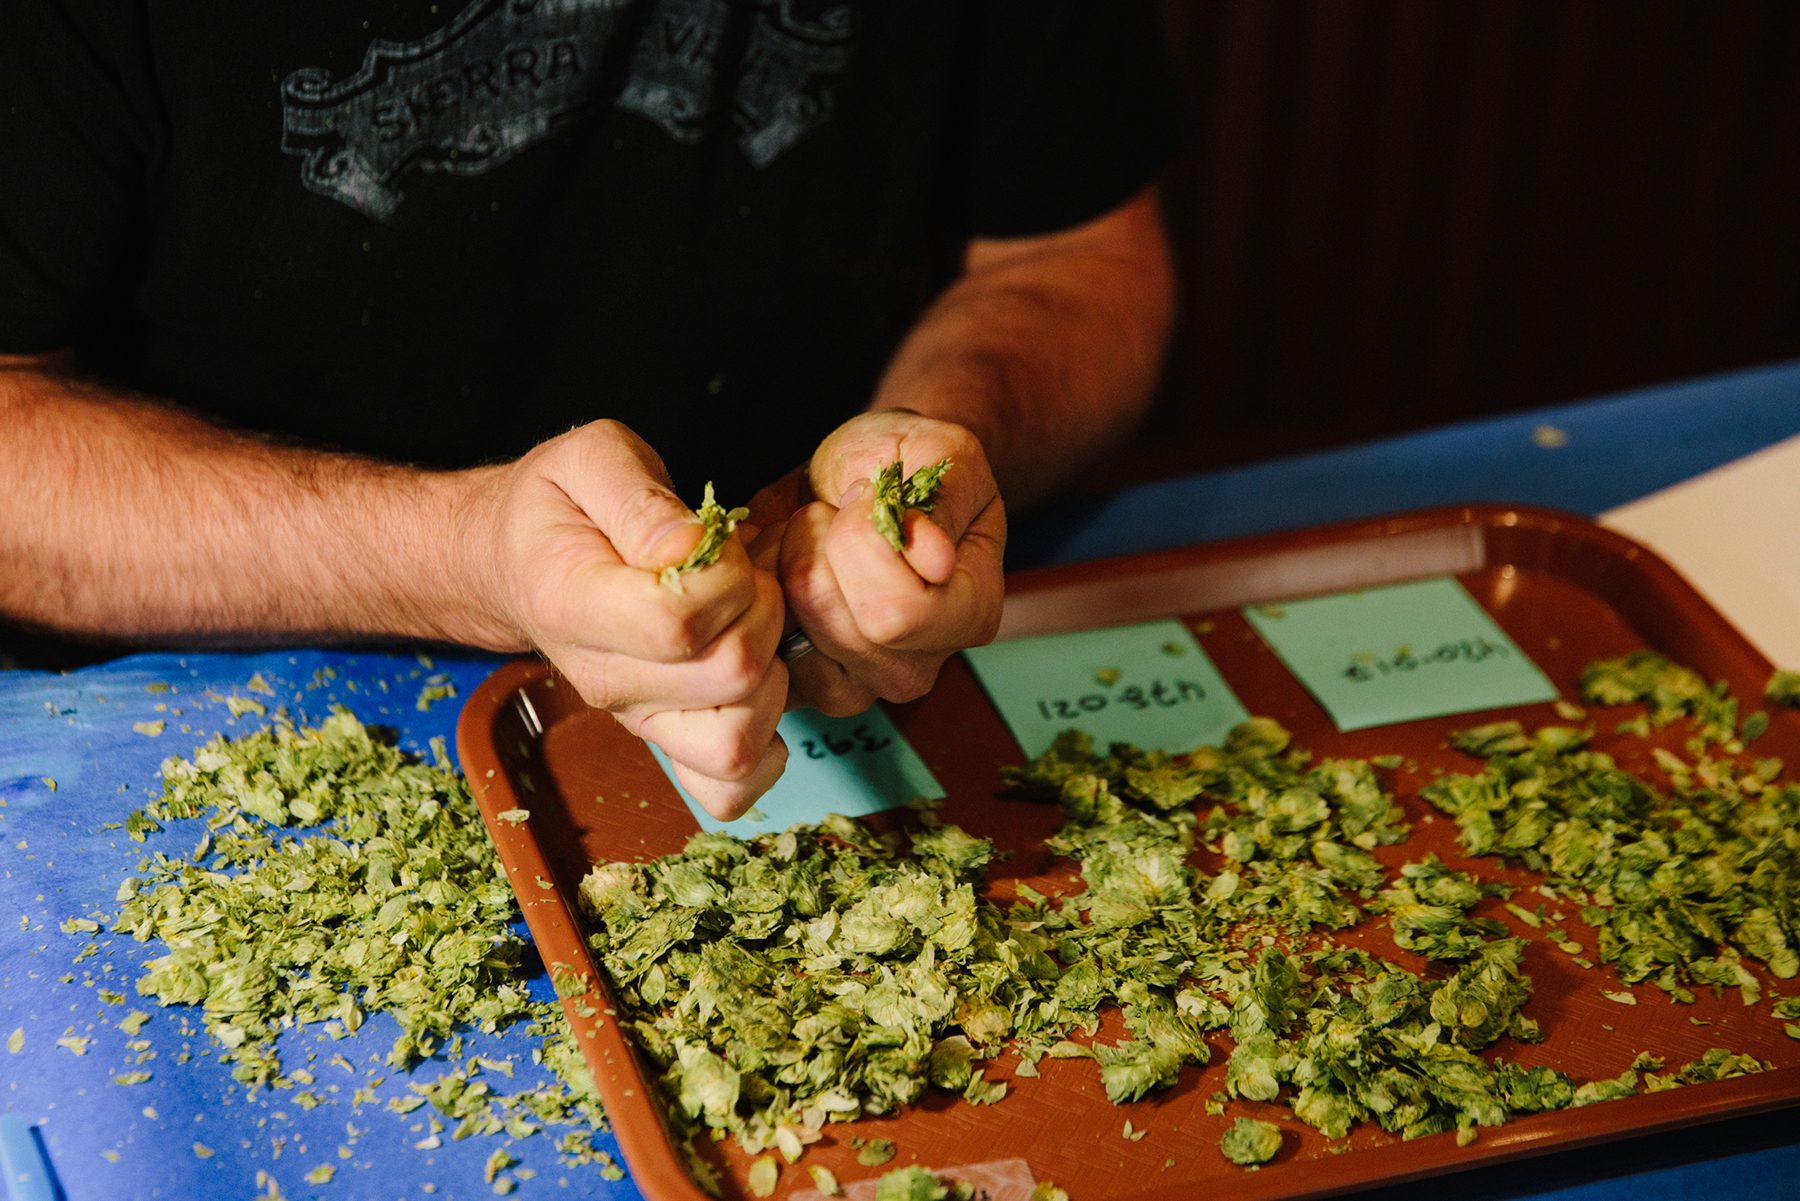 A Sierra Nevada brewer rubbing hops in their hands